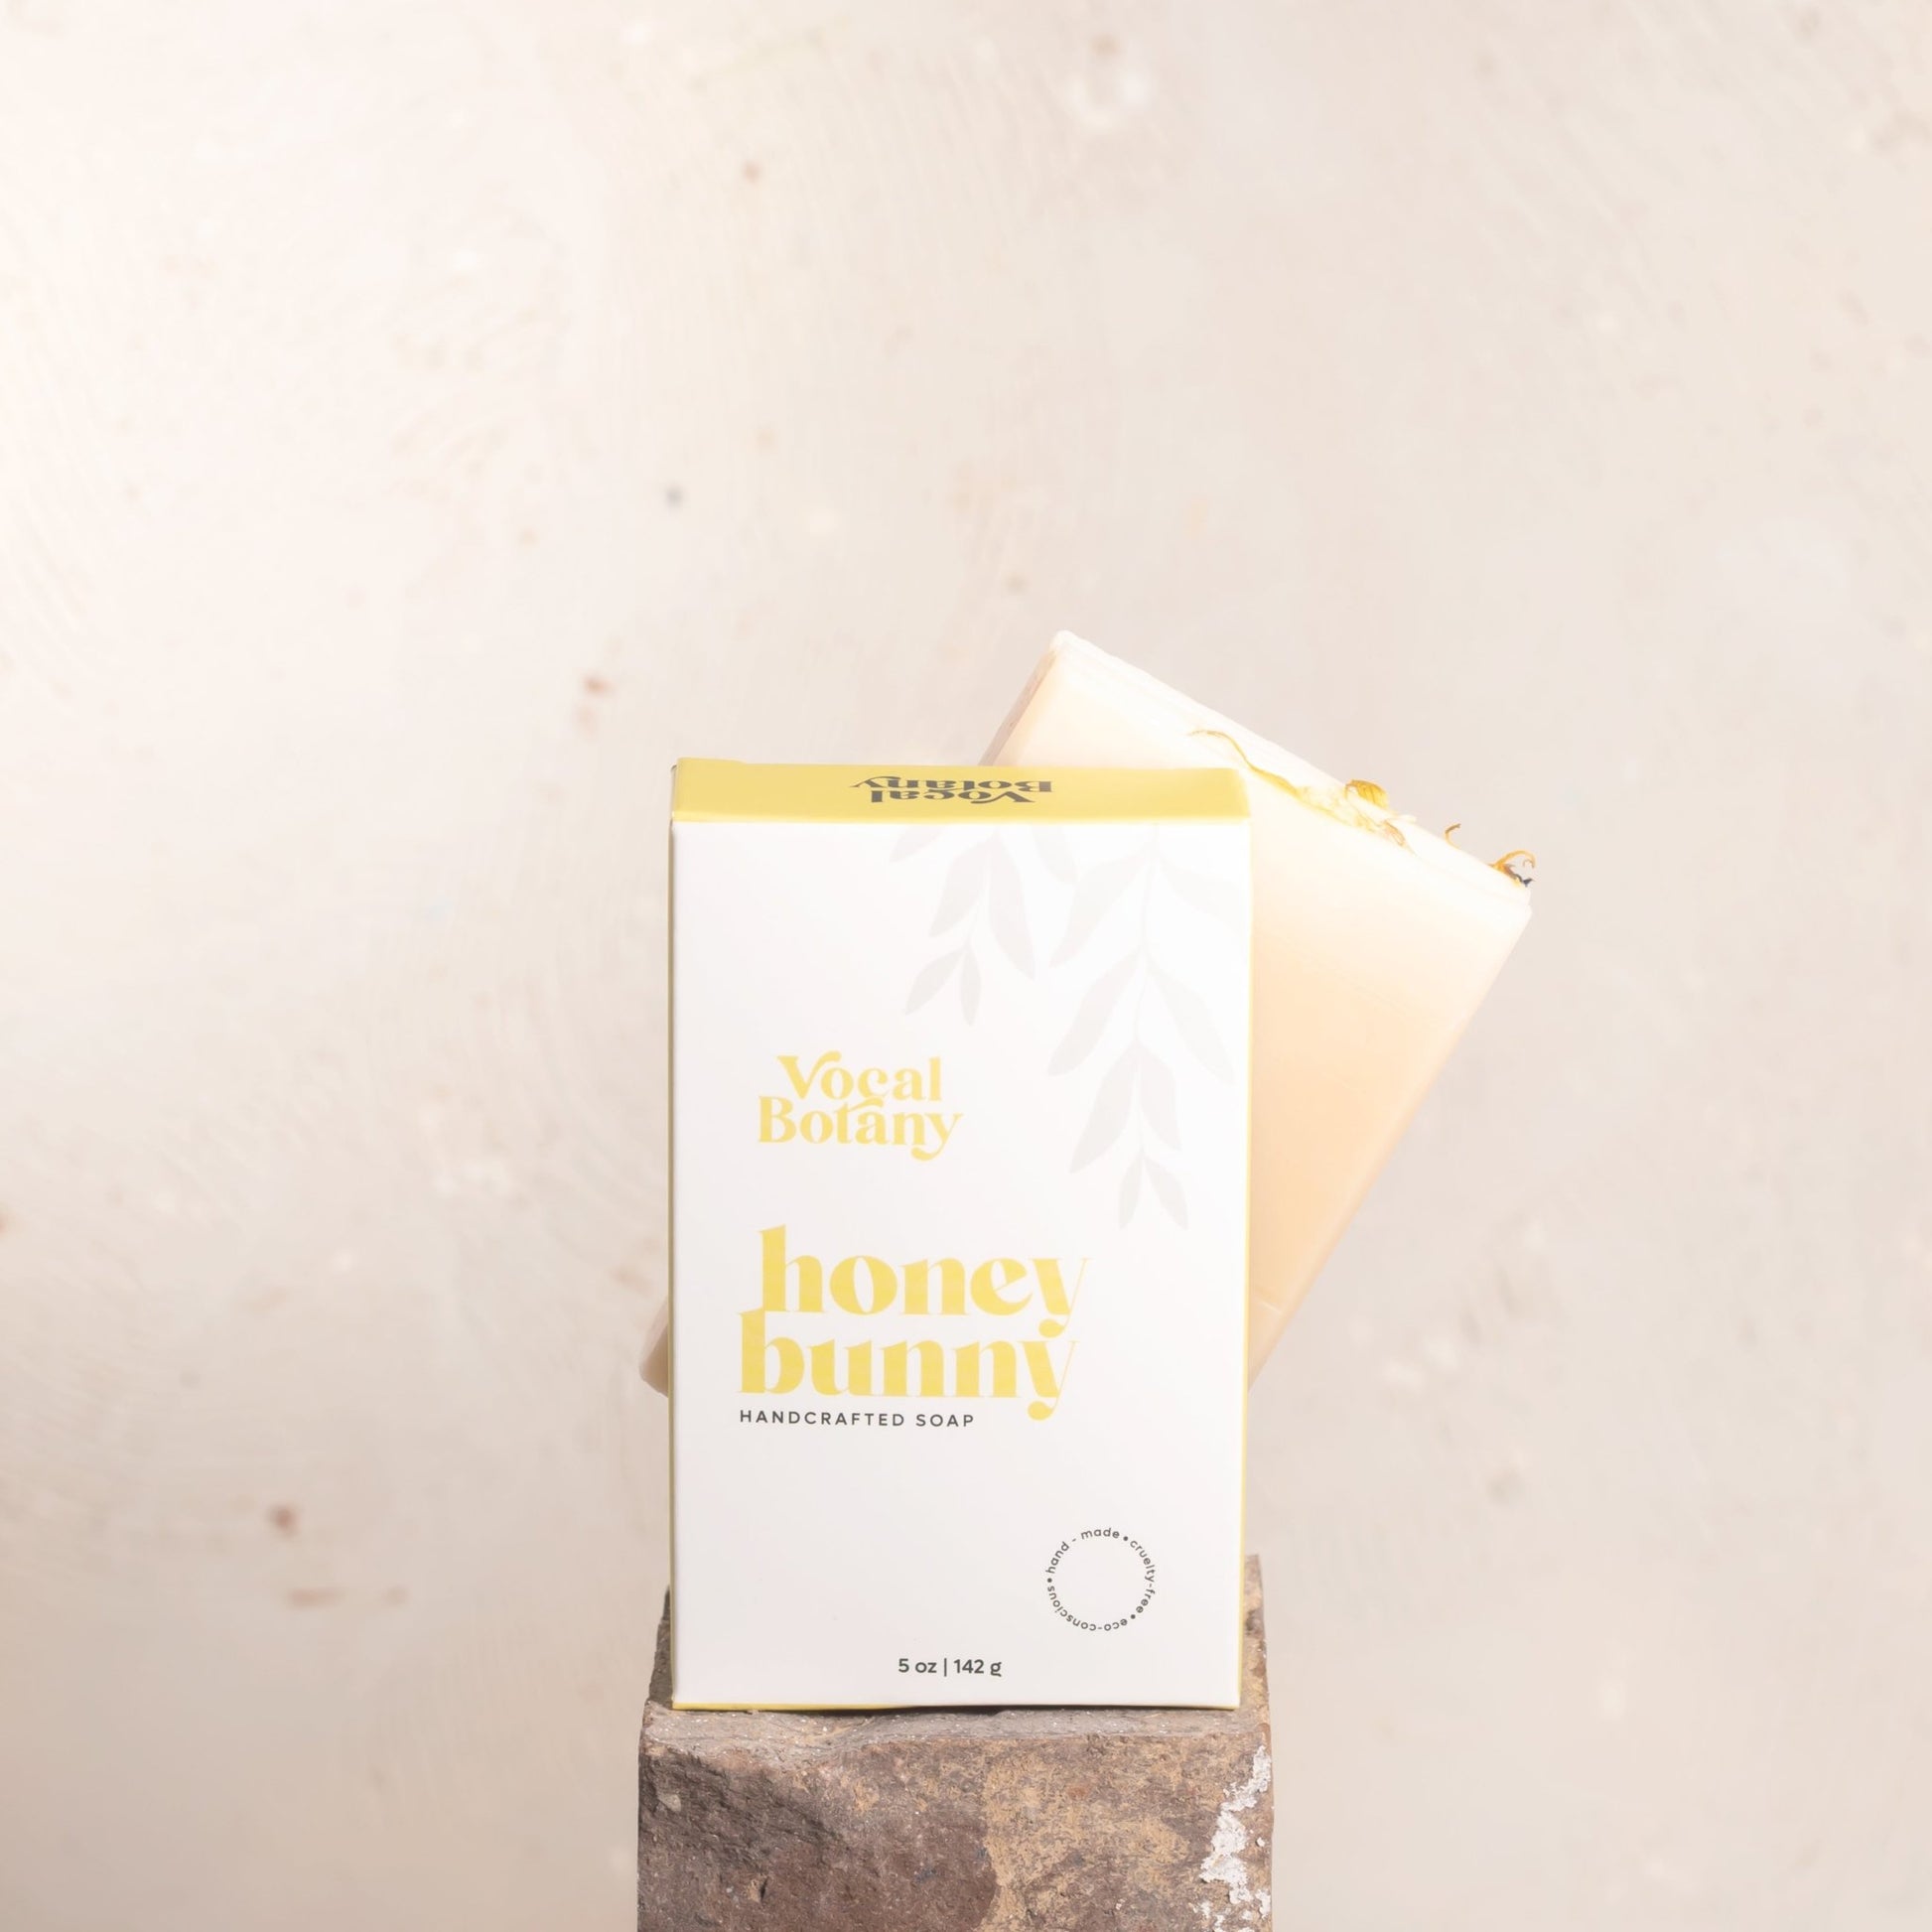 Honey Bunny Soap Bar - Vocal Botany